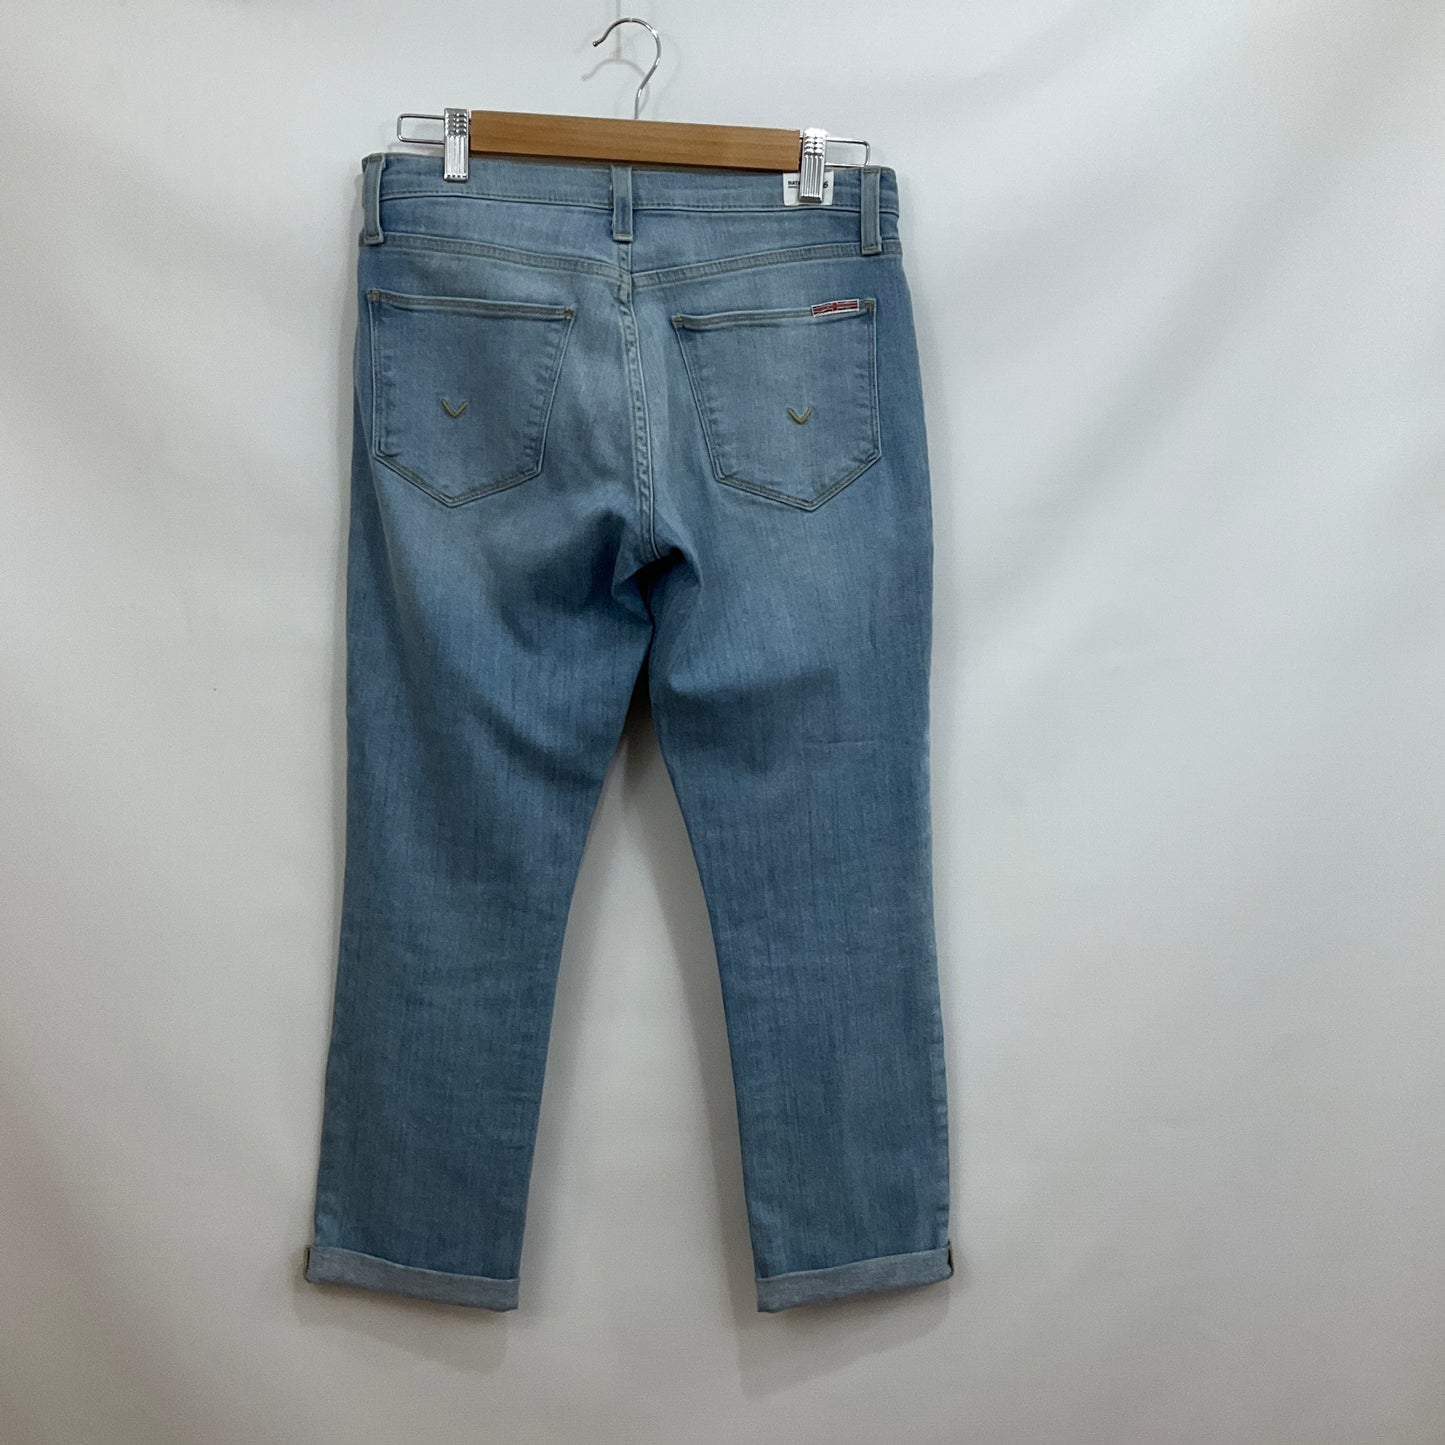 Jeans Skinny By Hudson  Size: Xs